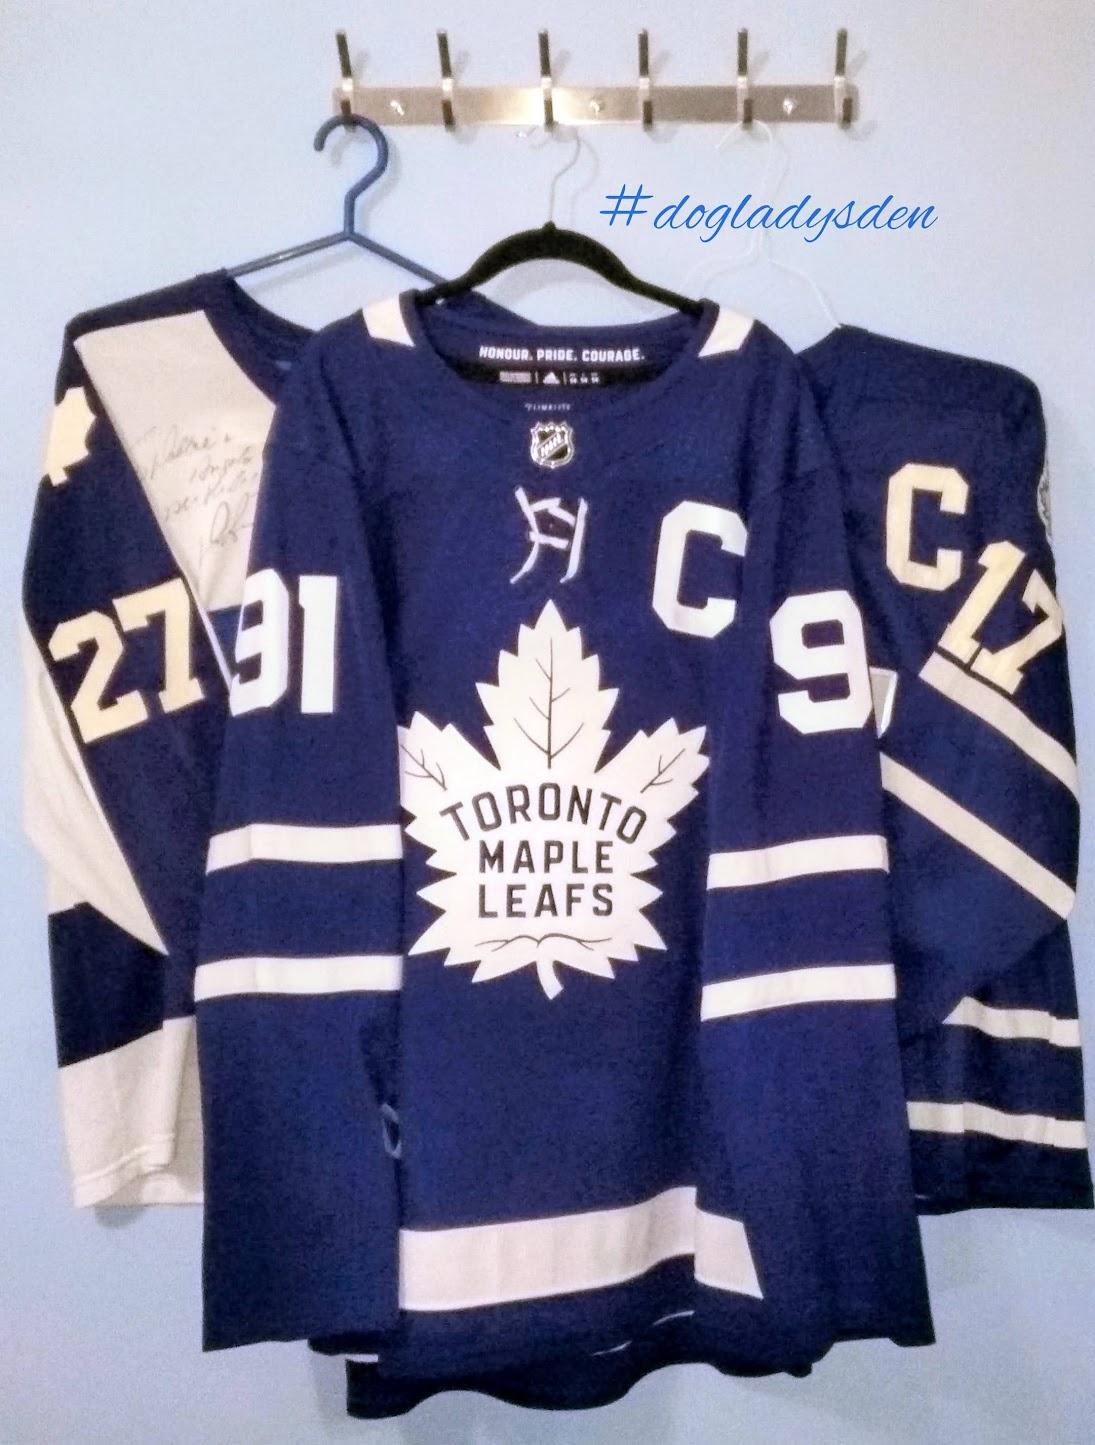 My Toronto Maple Leafs jerseys